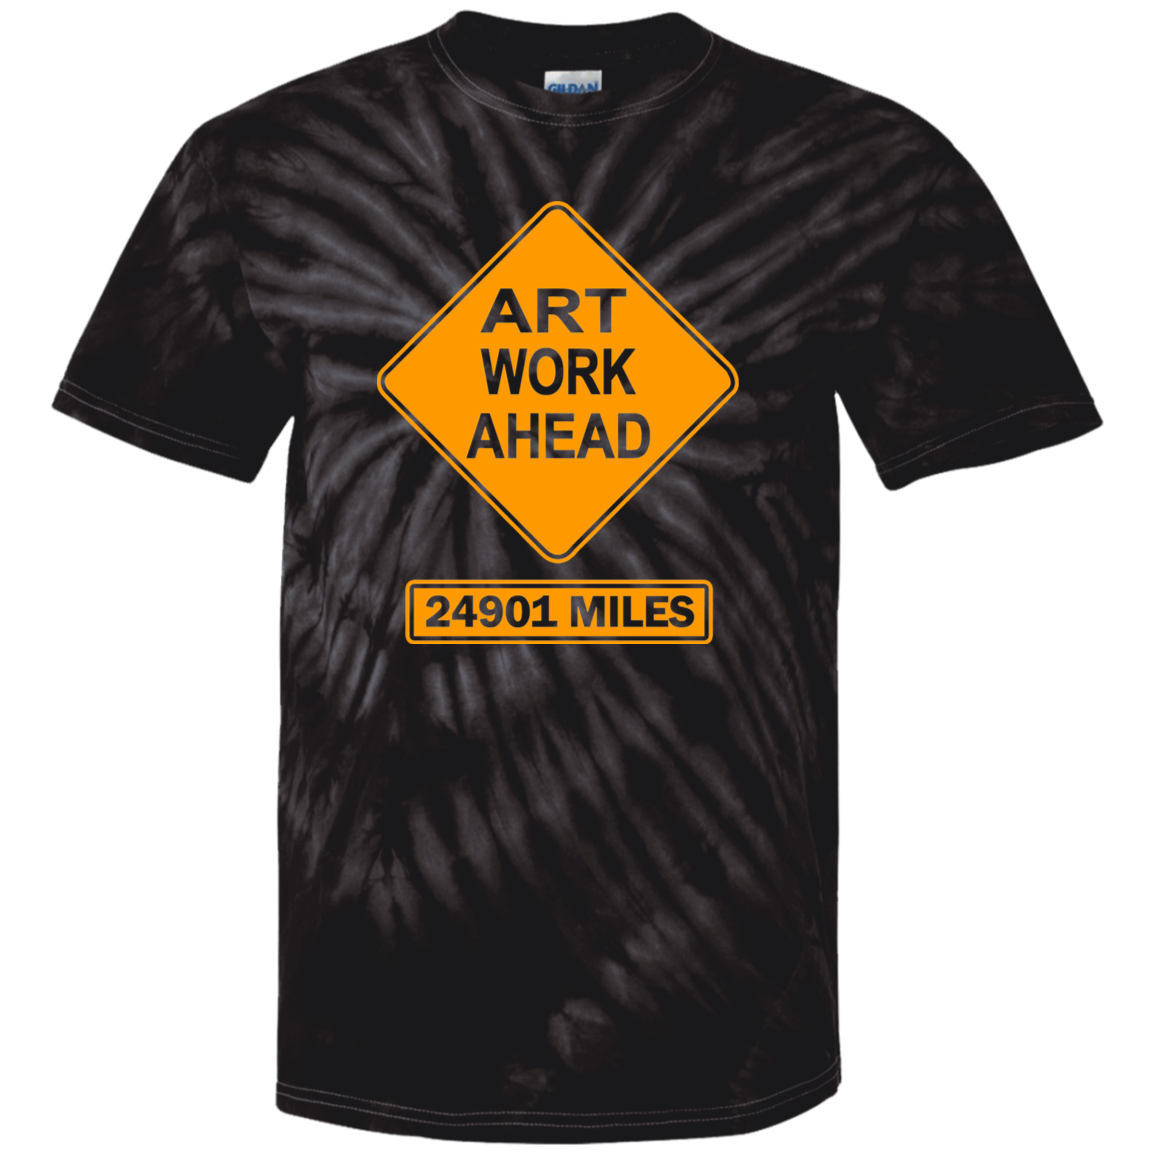 ArtichokeUSA Custom Design. Art Work Ahead. 24,901 Miles (Miles Around the Earth). Youth Tie Dye T-Shirt